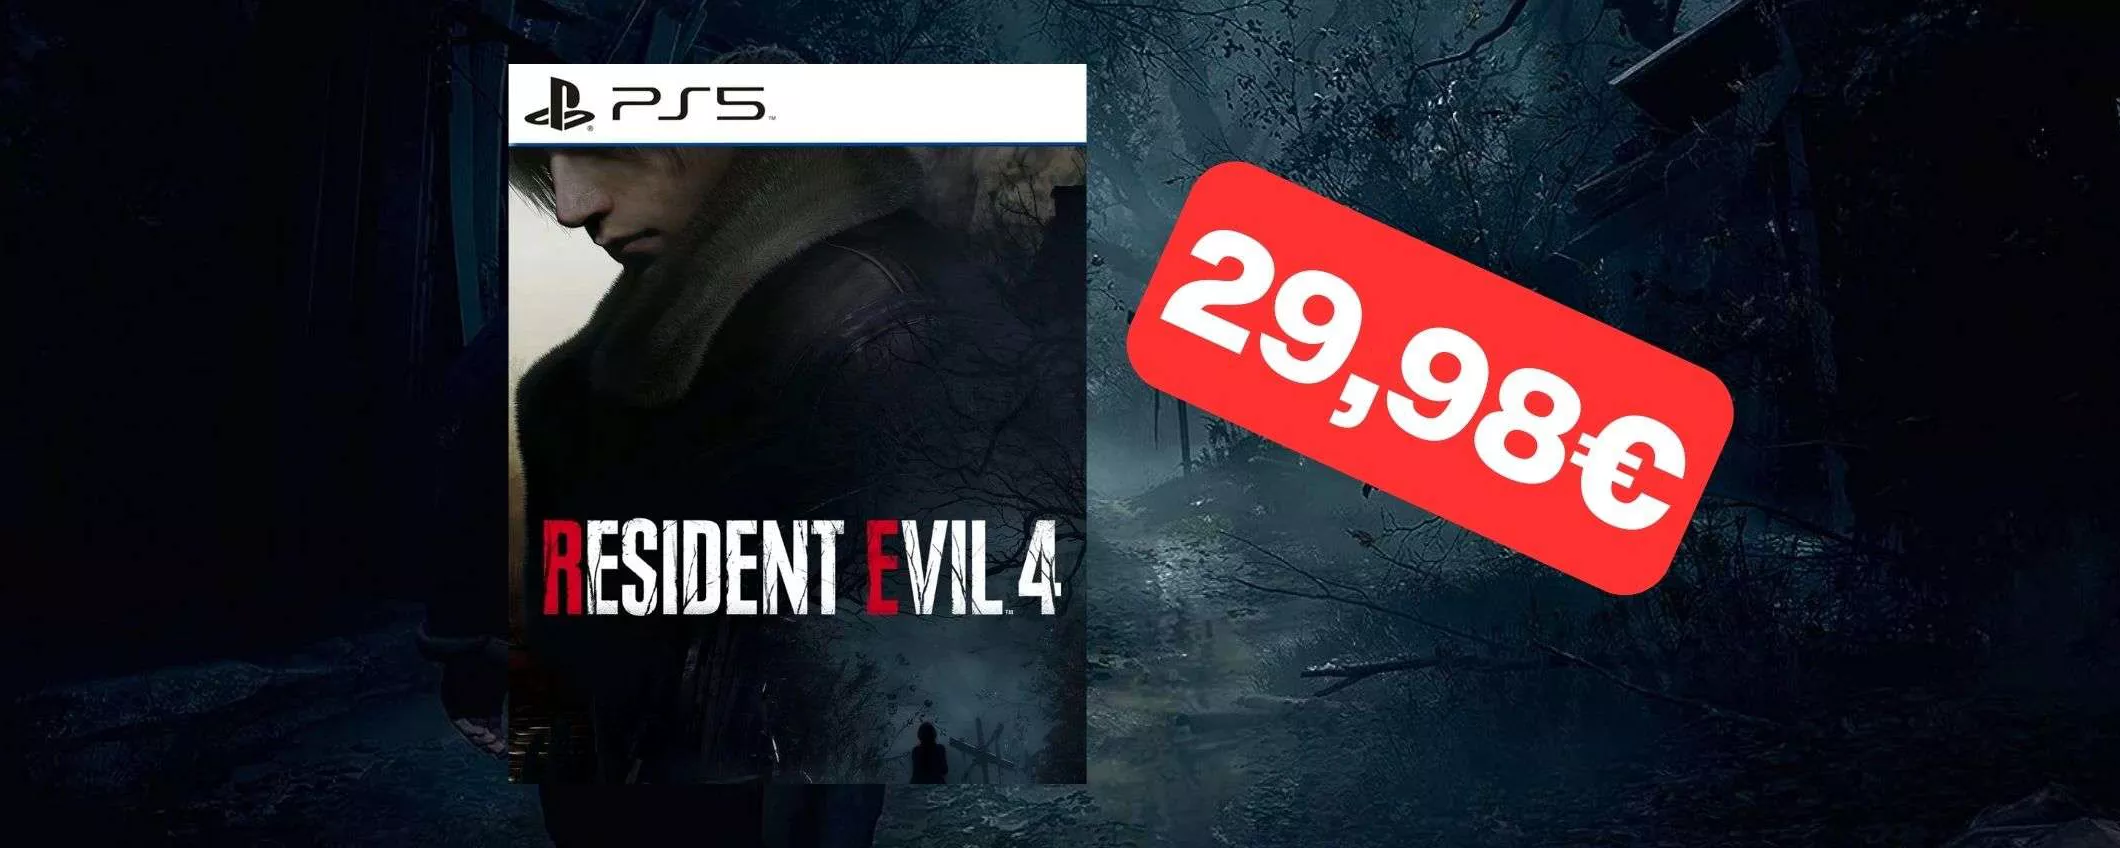 Resident Evil 4: ottimo MINIMO STORICO su Amazon (29,98€)